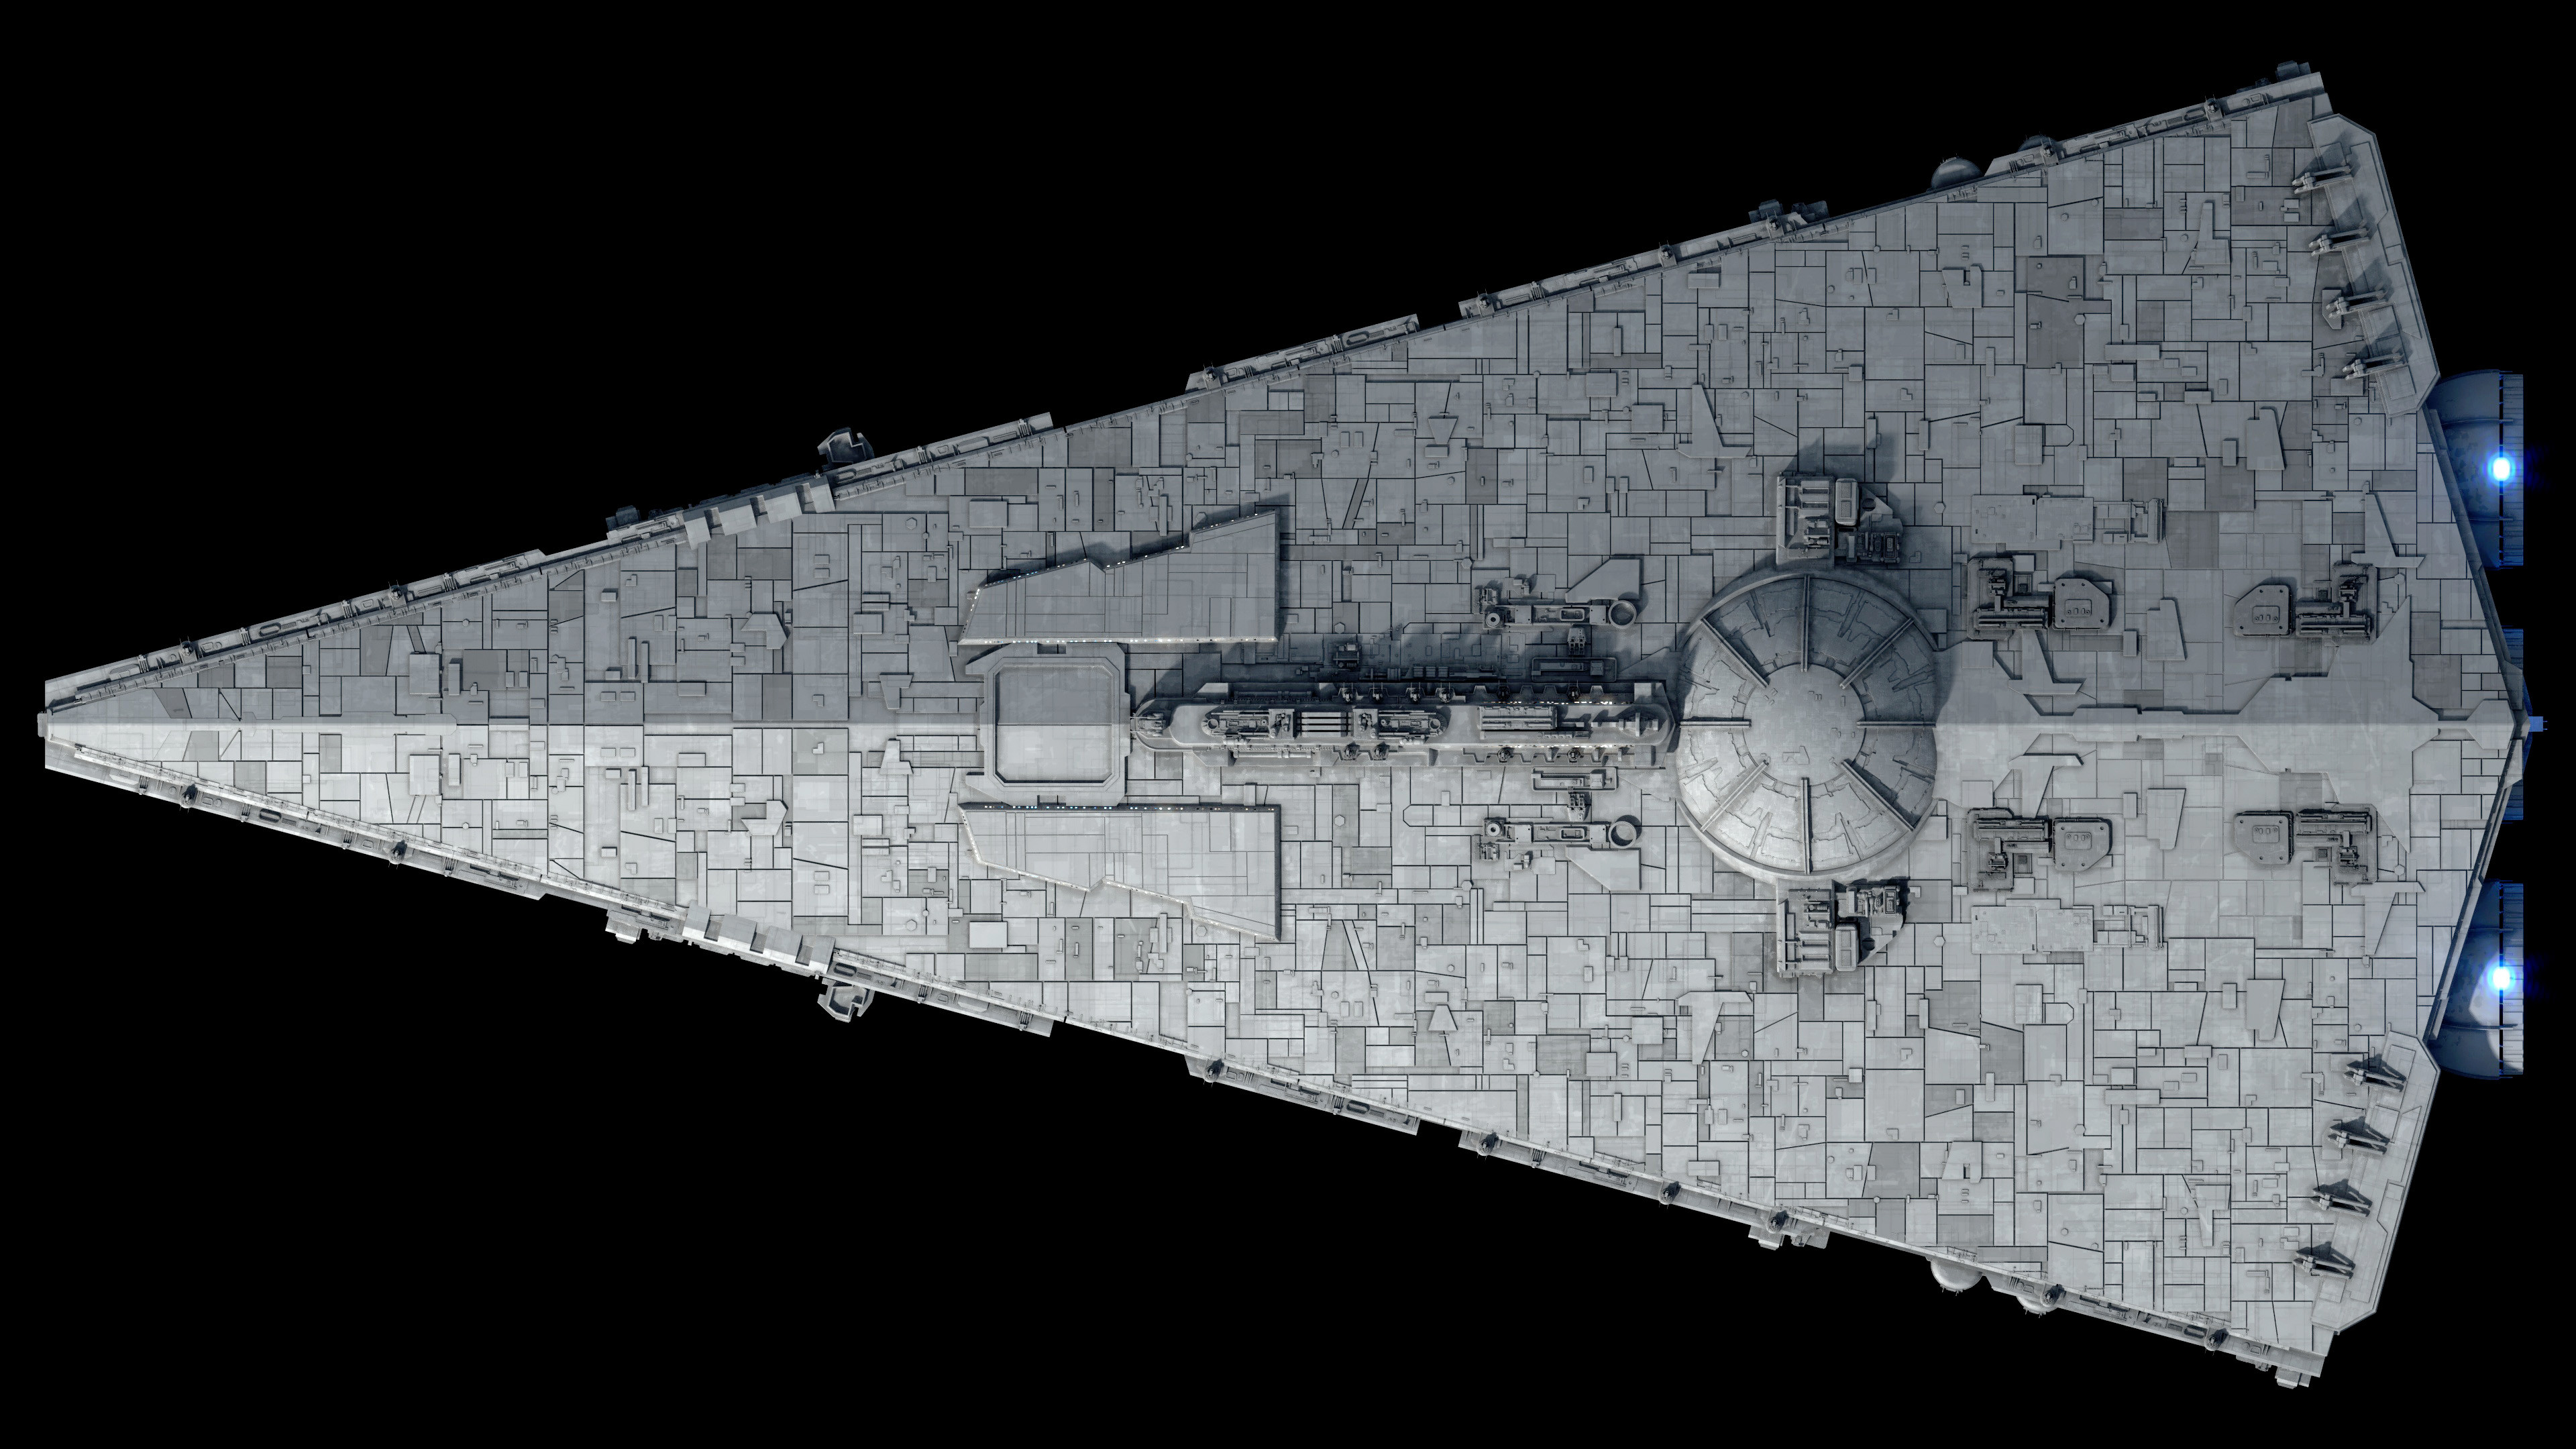 Procursator-class Star Destroyer.